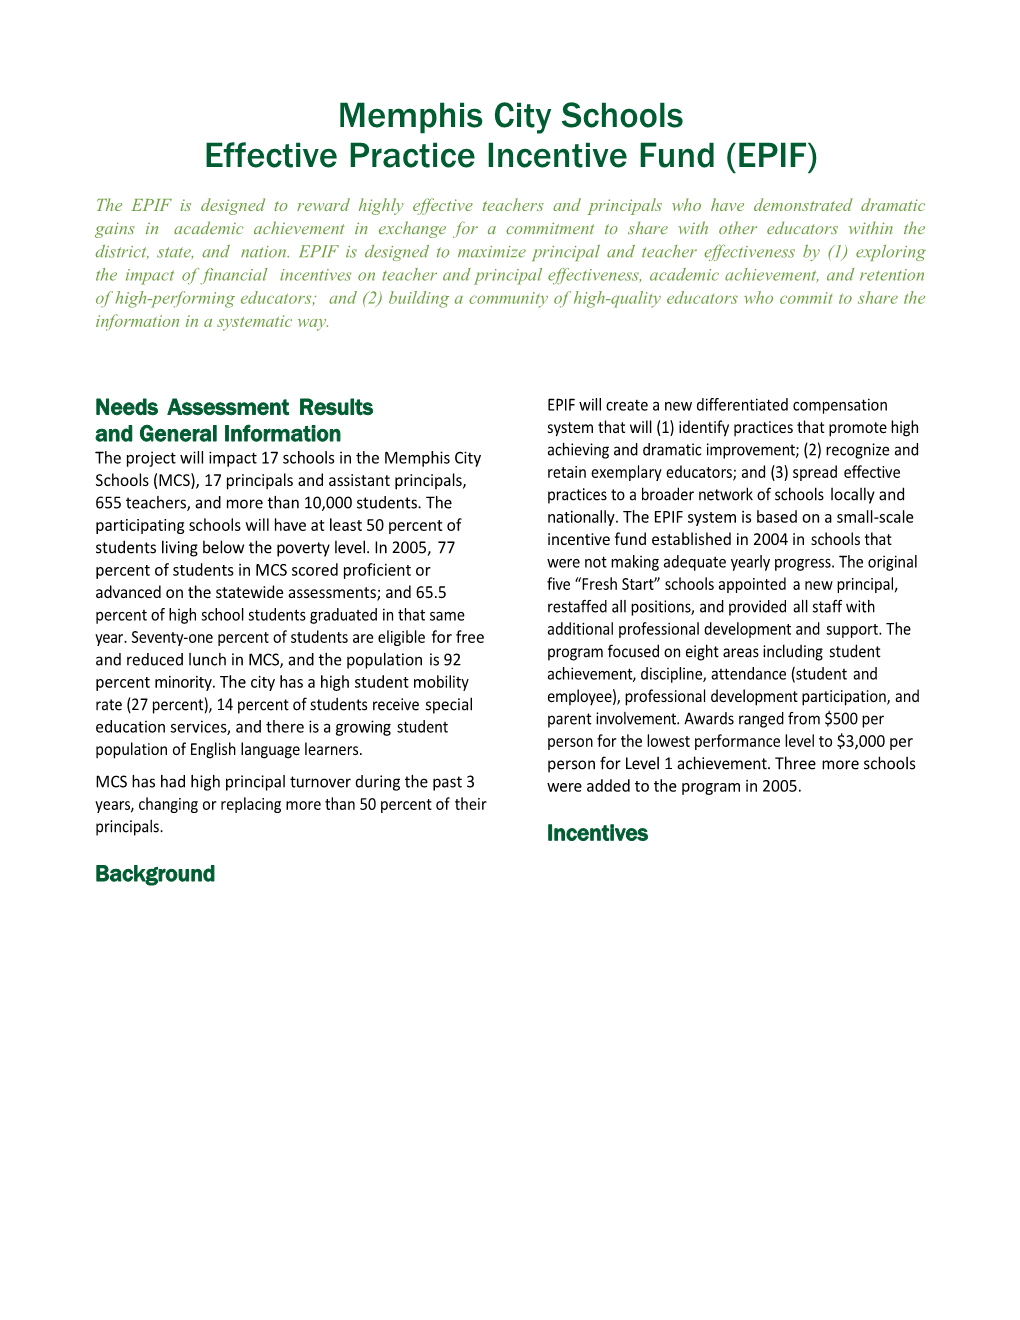 Memphis City Schools Effective Practice Incentive Fund (EPIF) (MS Word)